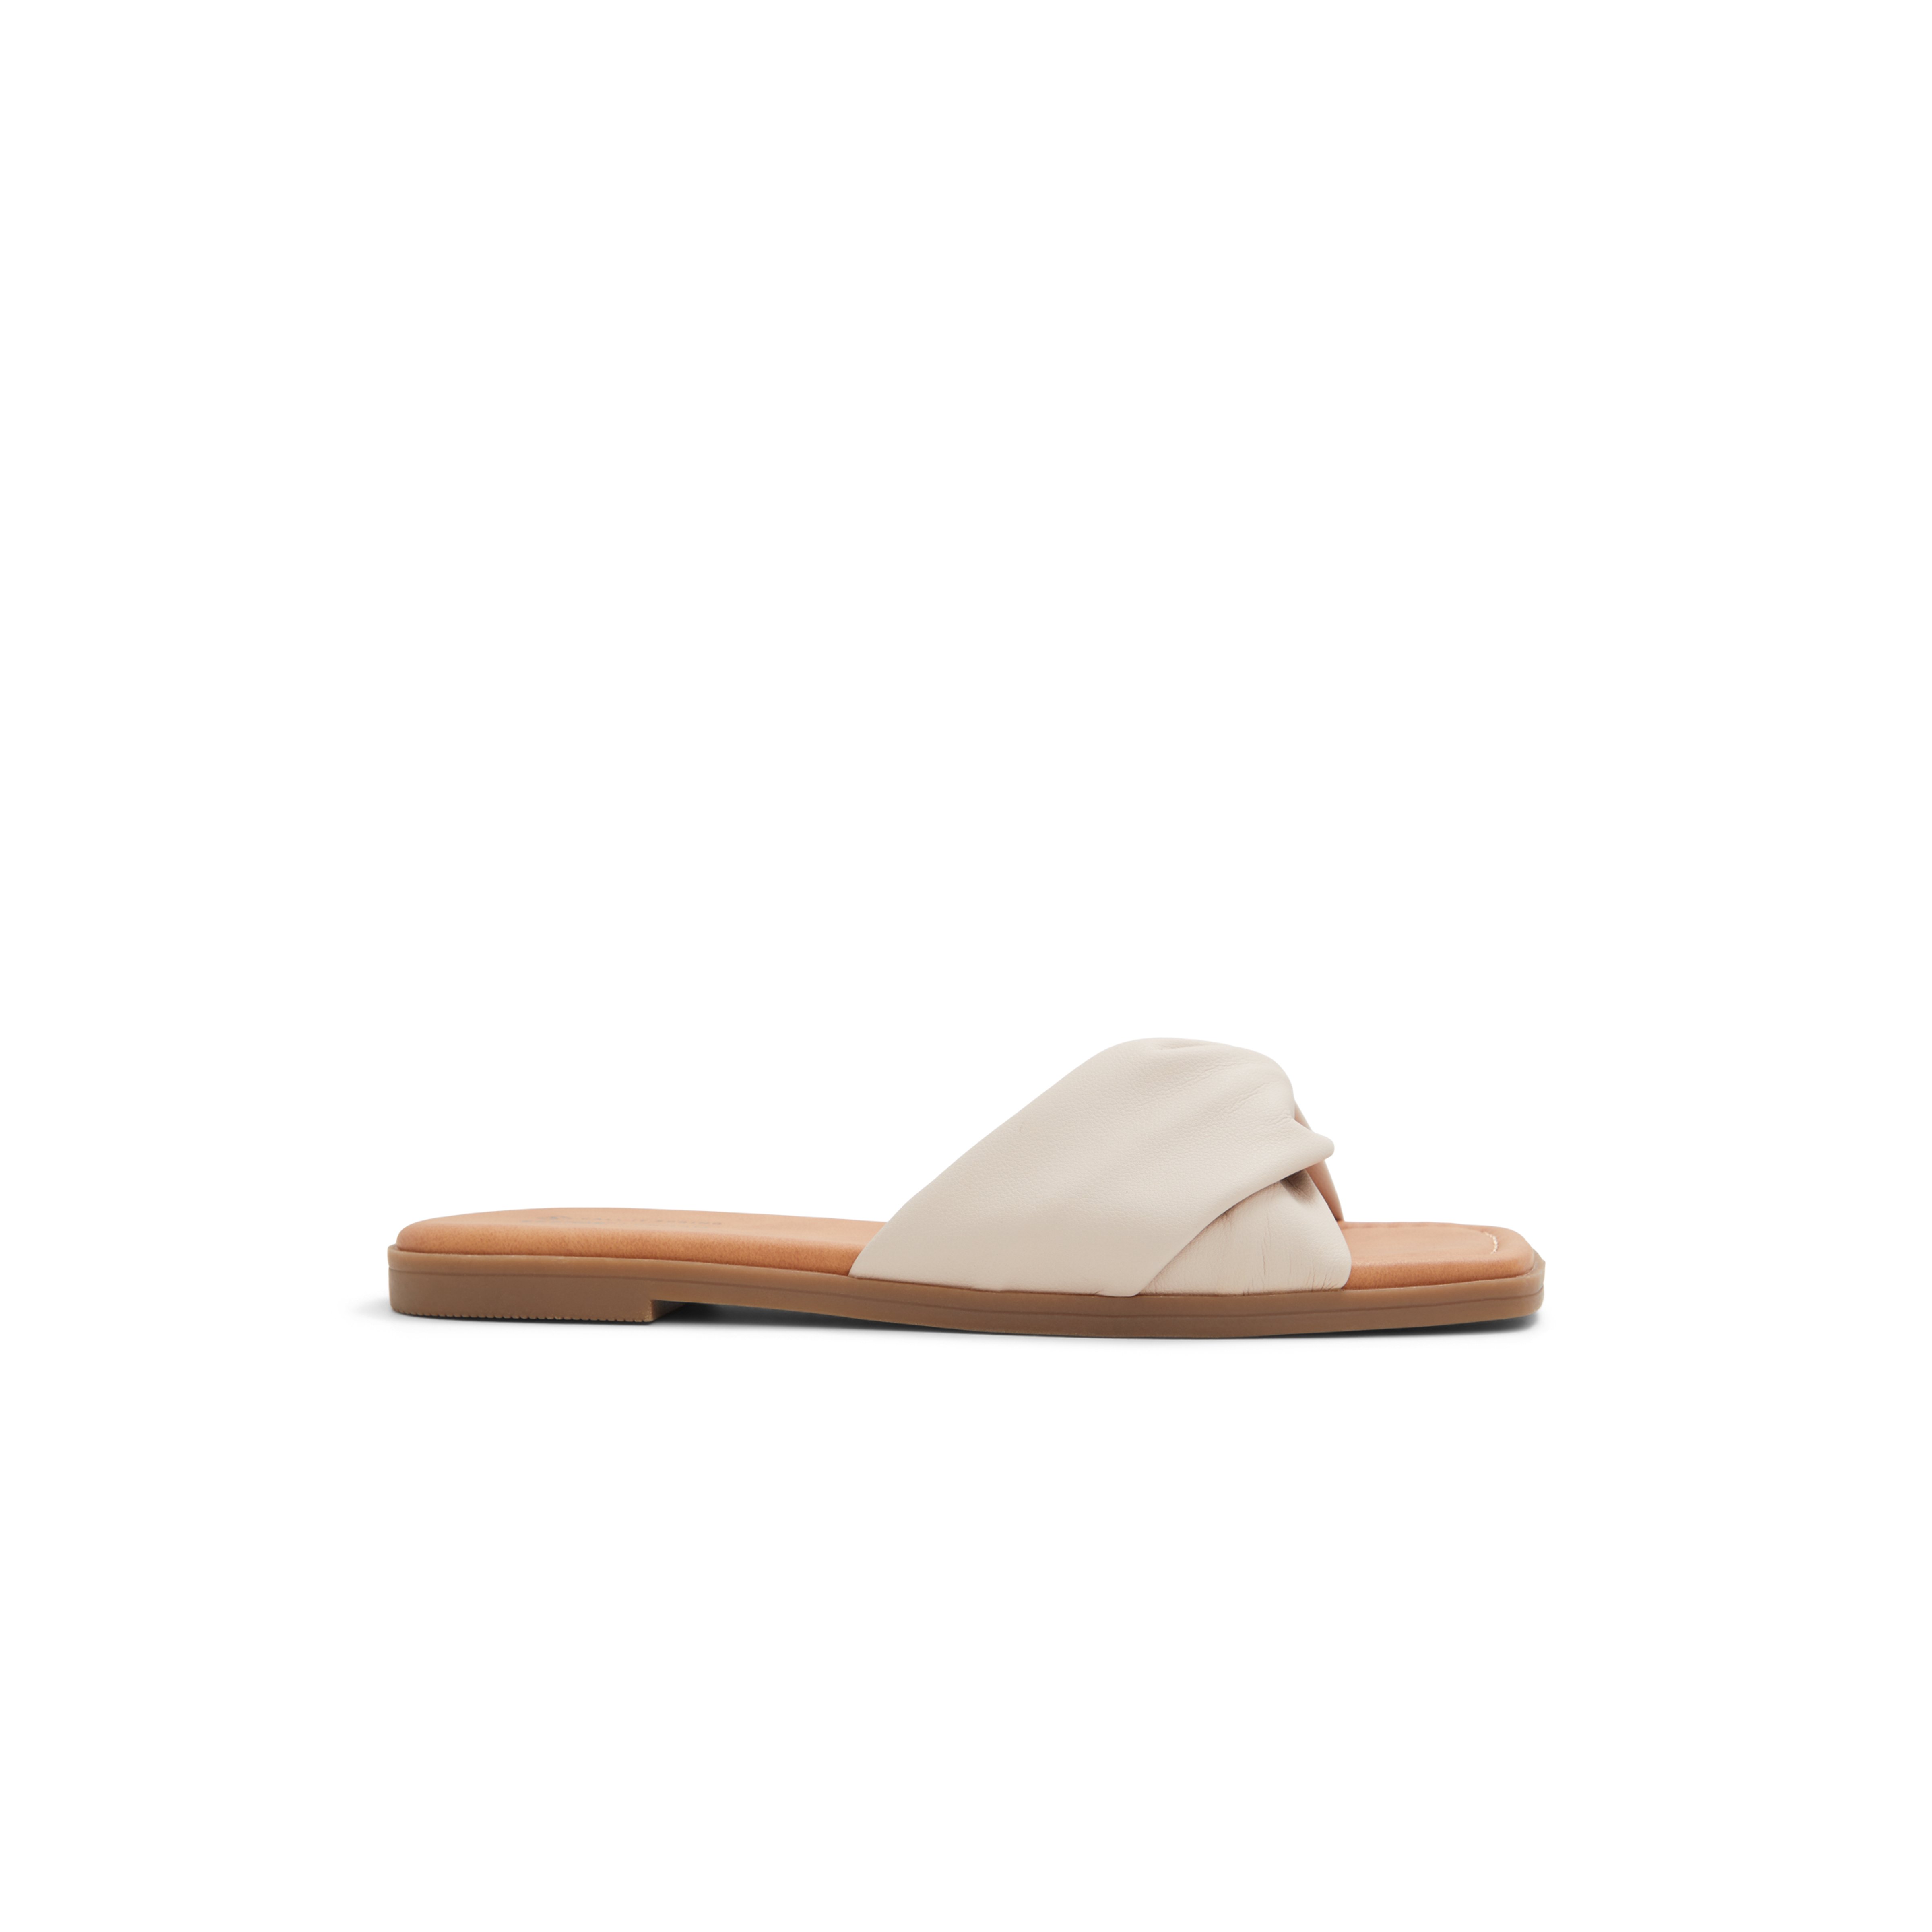 Peaches Women's Beige Flat Sandals image number 0